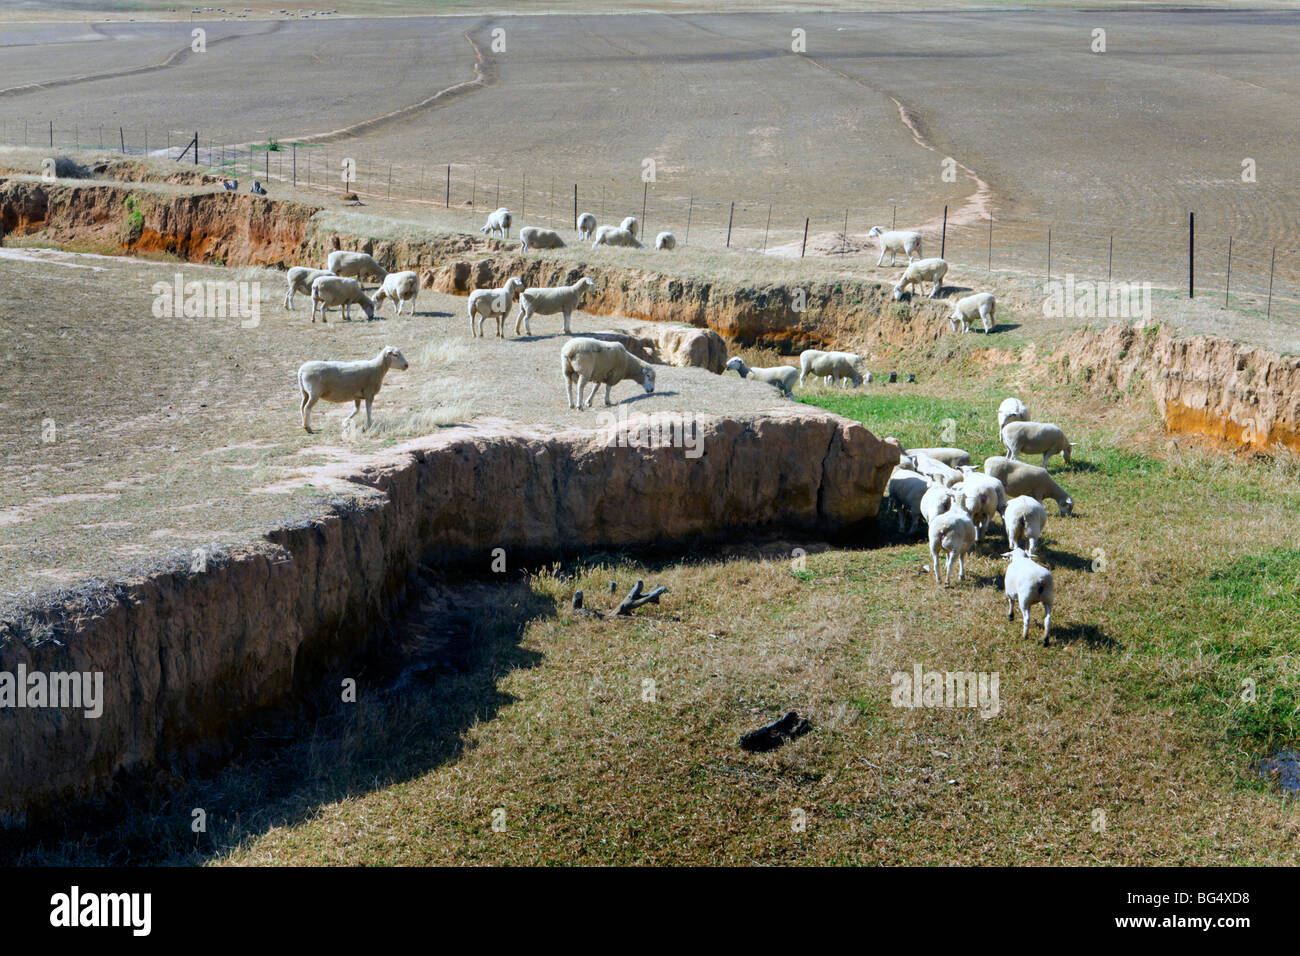 Merino sheep grazing in a gulch near a wheat field on a farm near Ceres, South Africa. Stock Photo